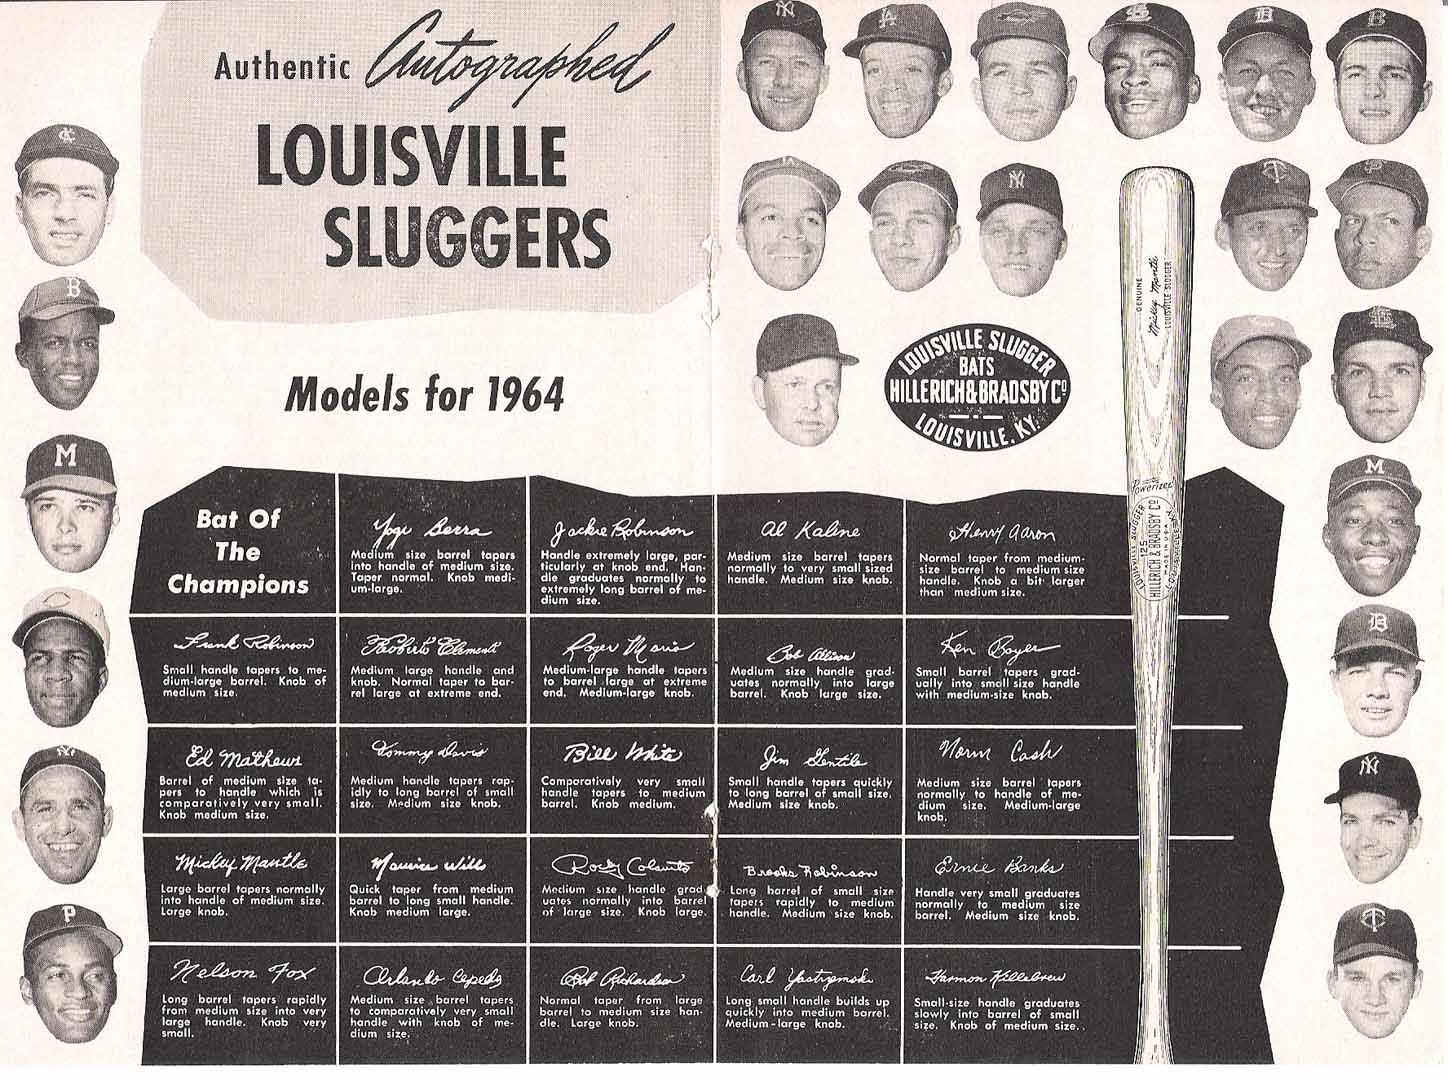 1964 louisville famous sluggers